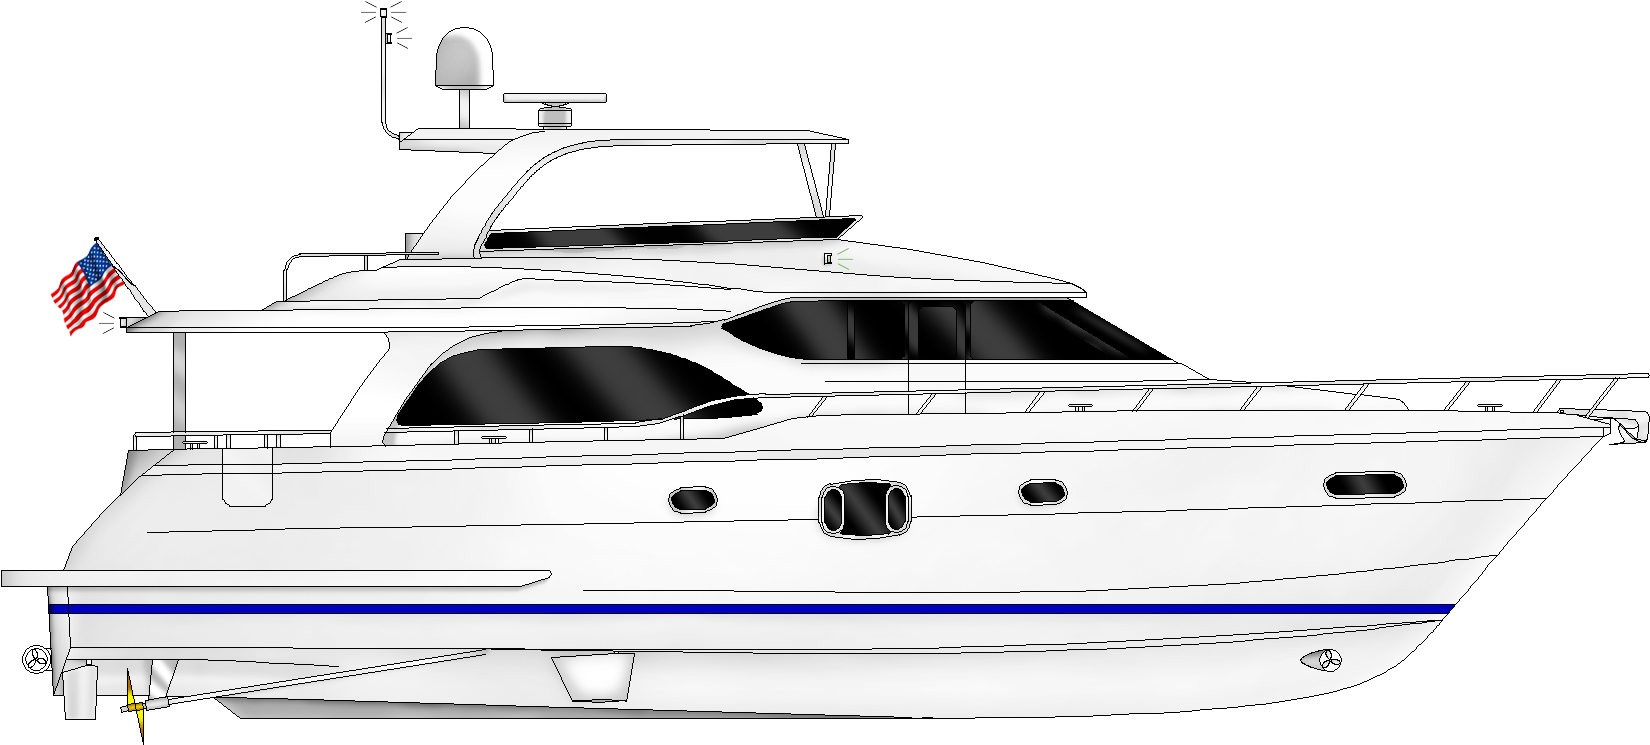 Layout & Specs - Luxury Yacht (1723x1115)